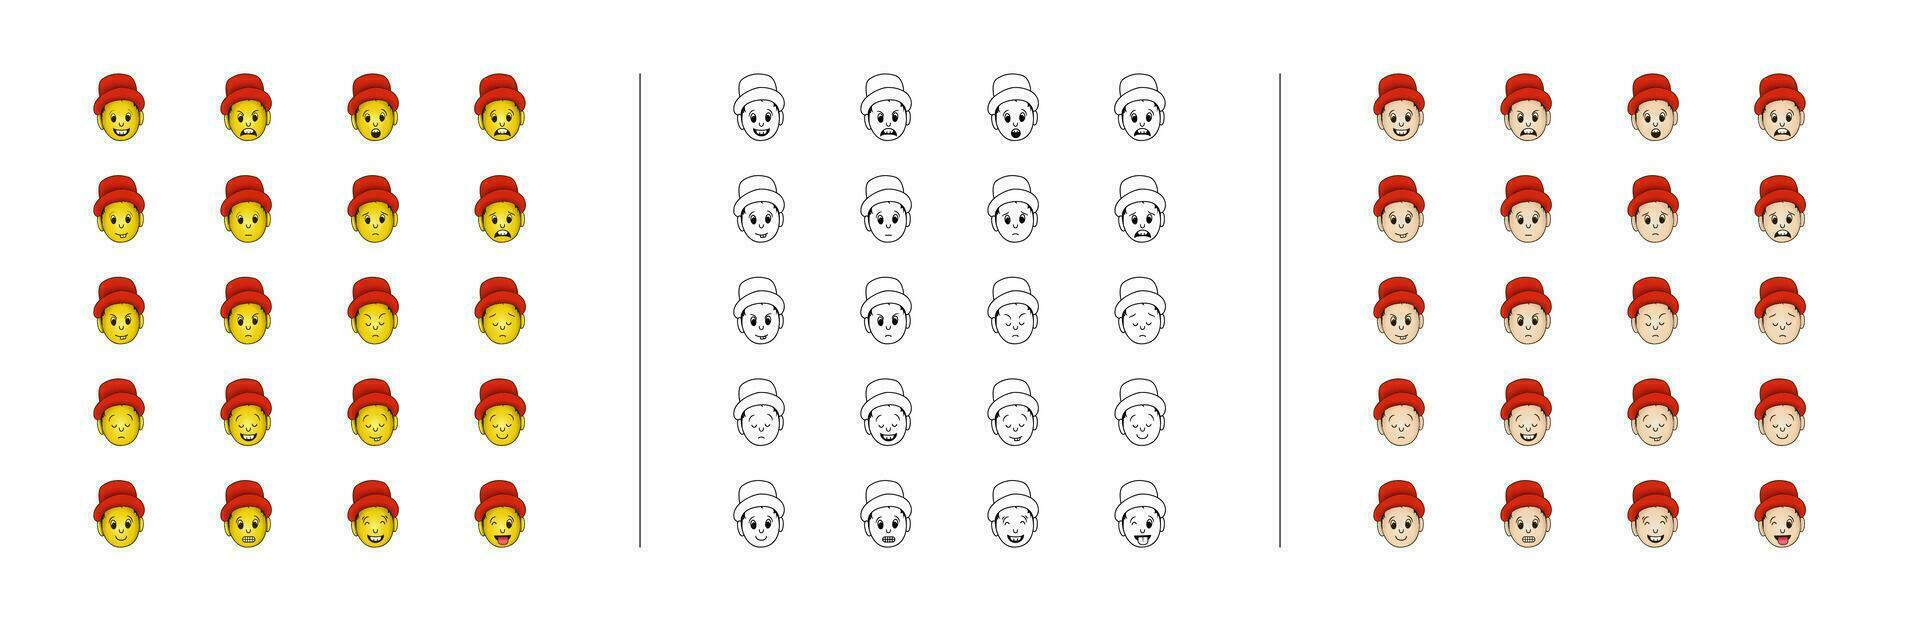 Emoji Icon Set Large Collection, Boy With Summer Cap Emoji Icons vector